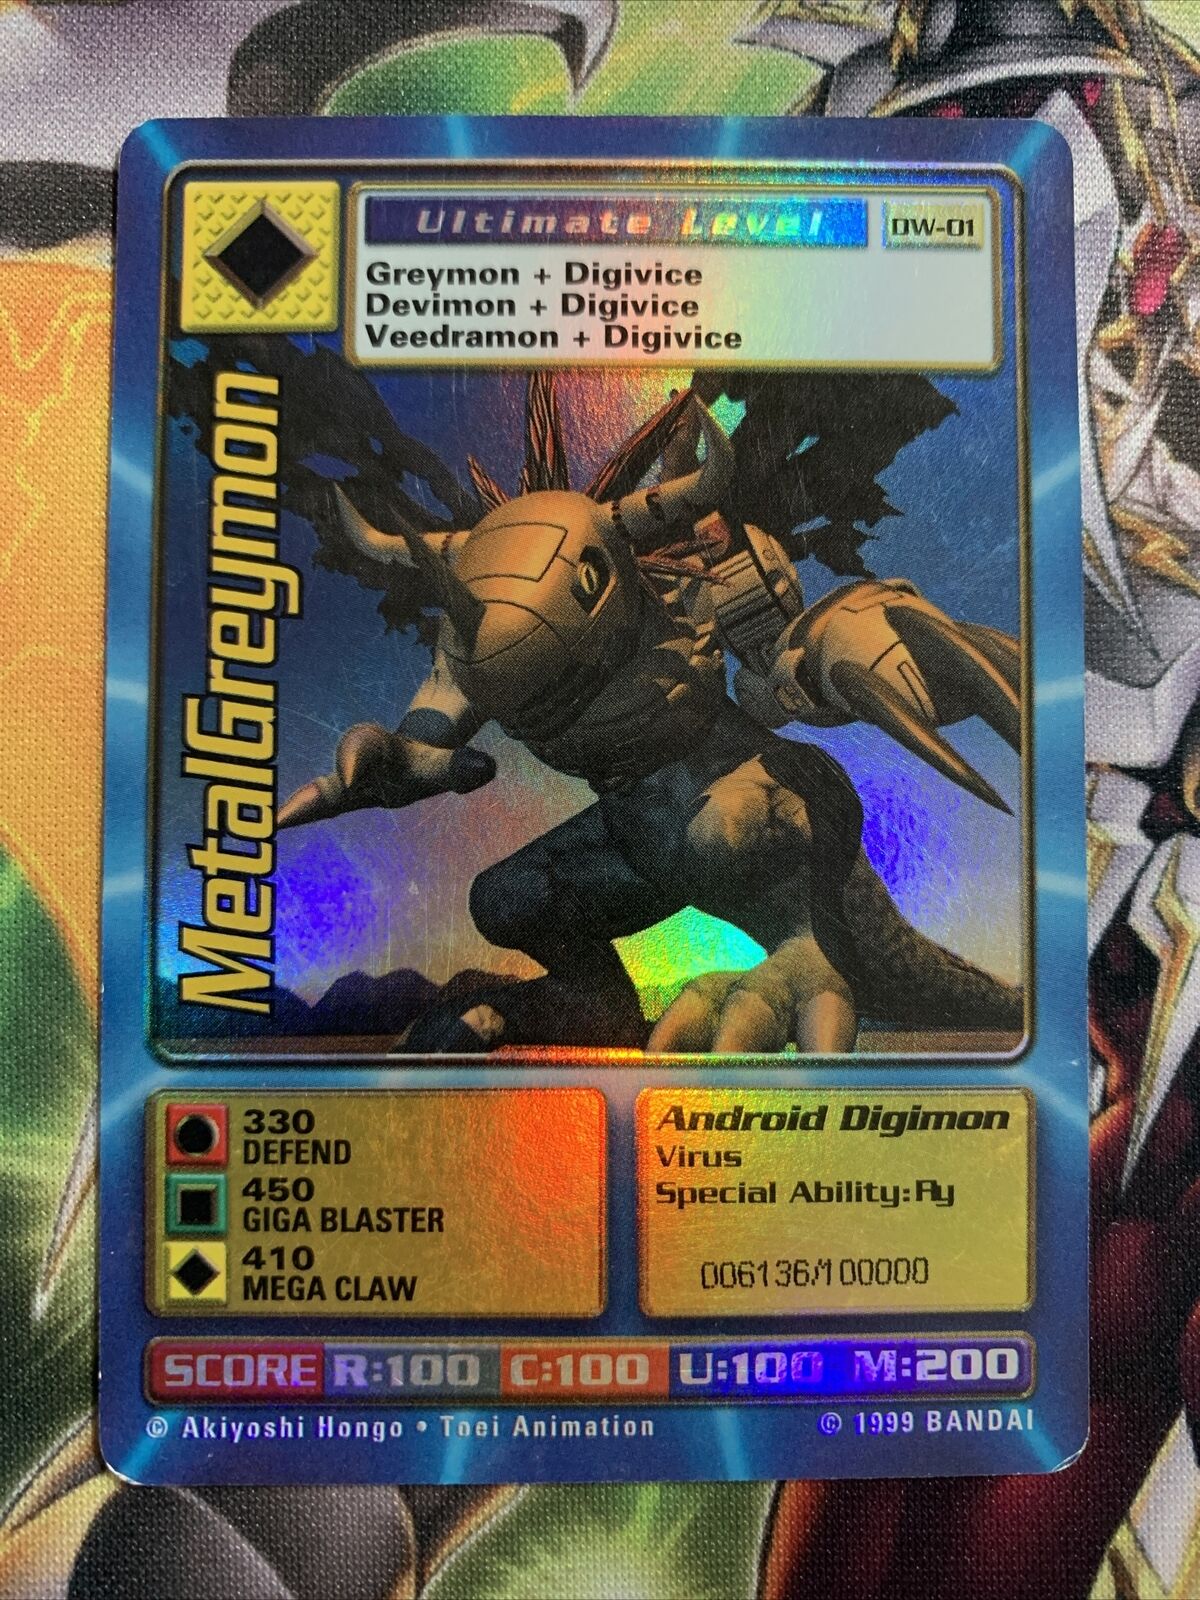 Digimon World PlayStation Promo DW-01 MetalGreymon - number 006136 / 100,000